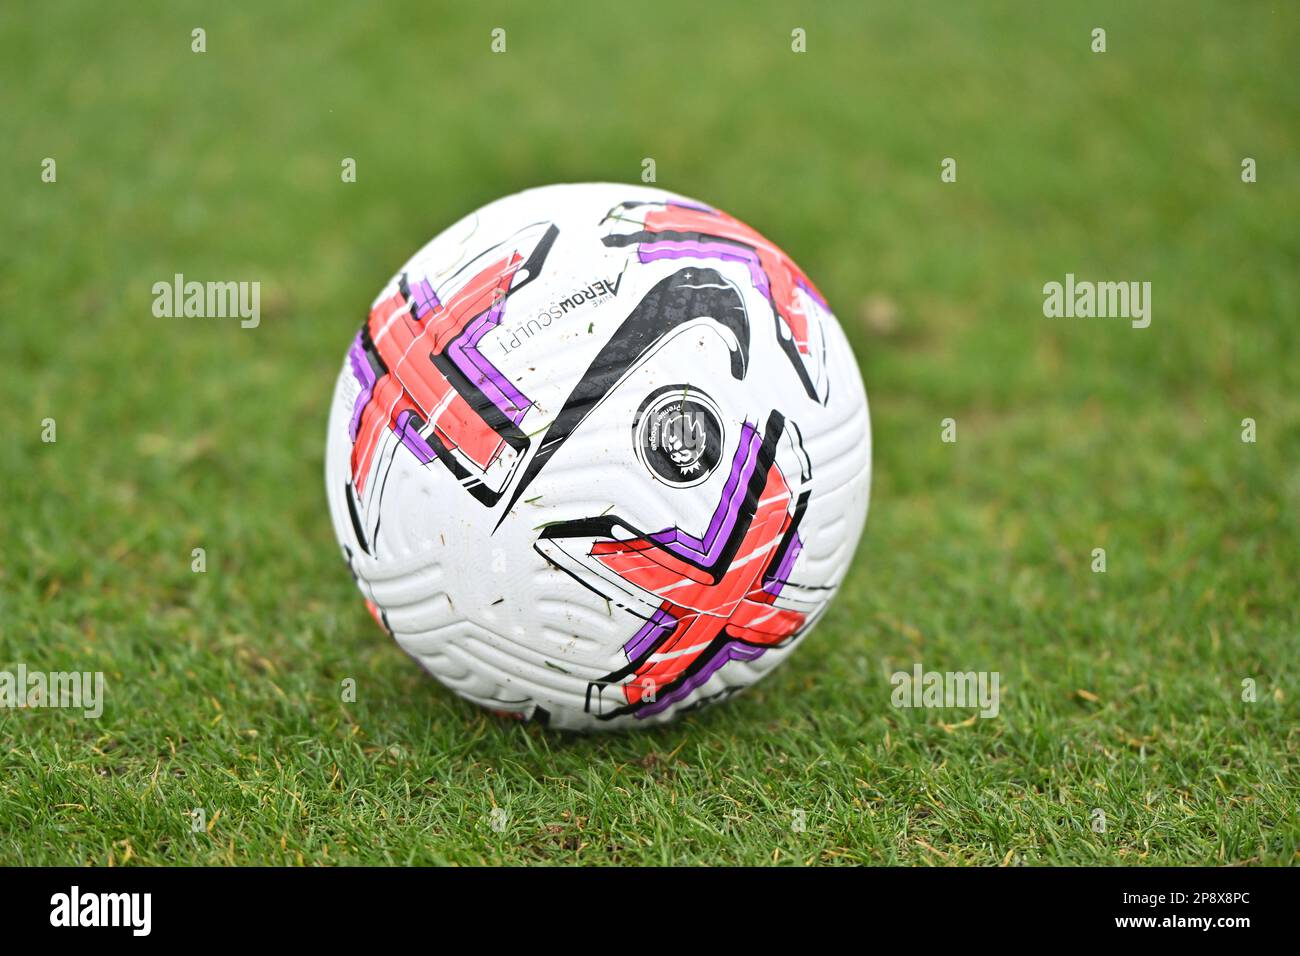 Tercer balón Nike Flight Premier League 2022/23